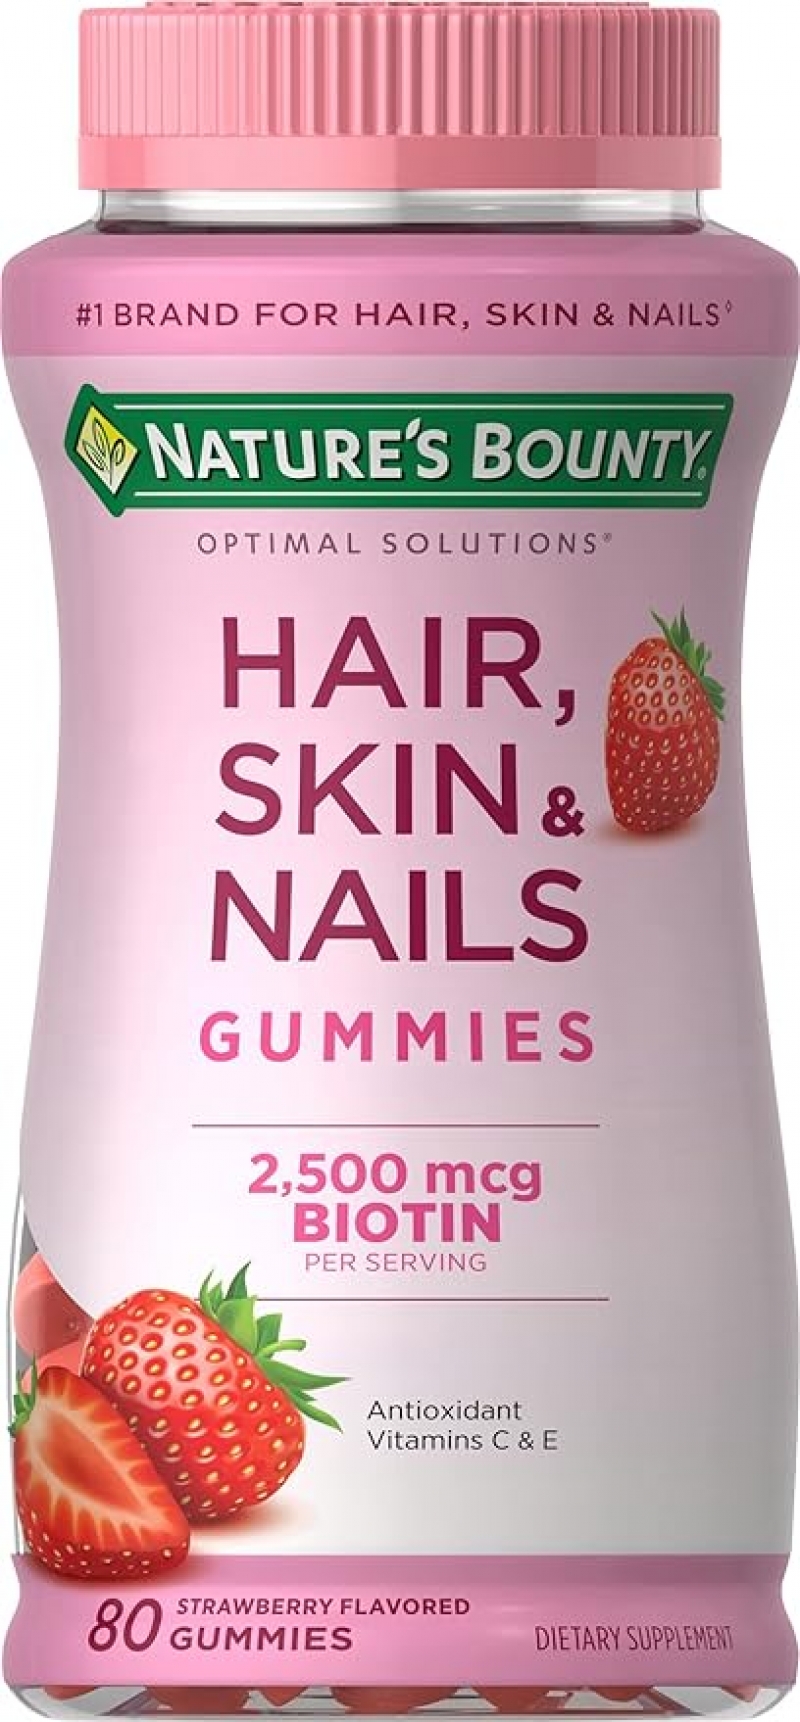 ihocon: [买一送一] Nature's Bounty Optimal Solutions Hair, Skin & Nails Vitamin Gummies with Biotin, 2500 mcg, Strawberry, 3-Pack of 80 Count Bottles 头发/皮肤/指甲维他命软糖 80粒 2瓶